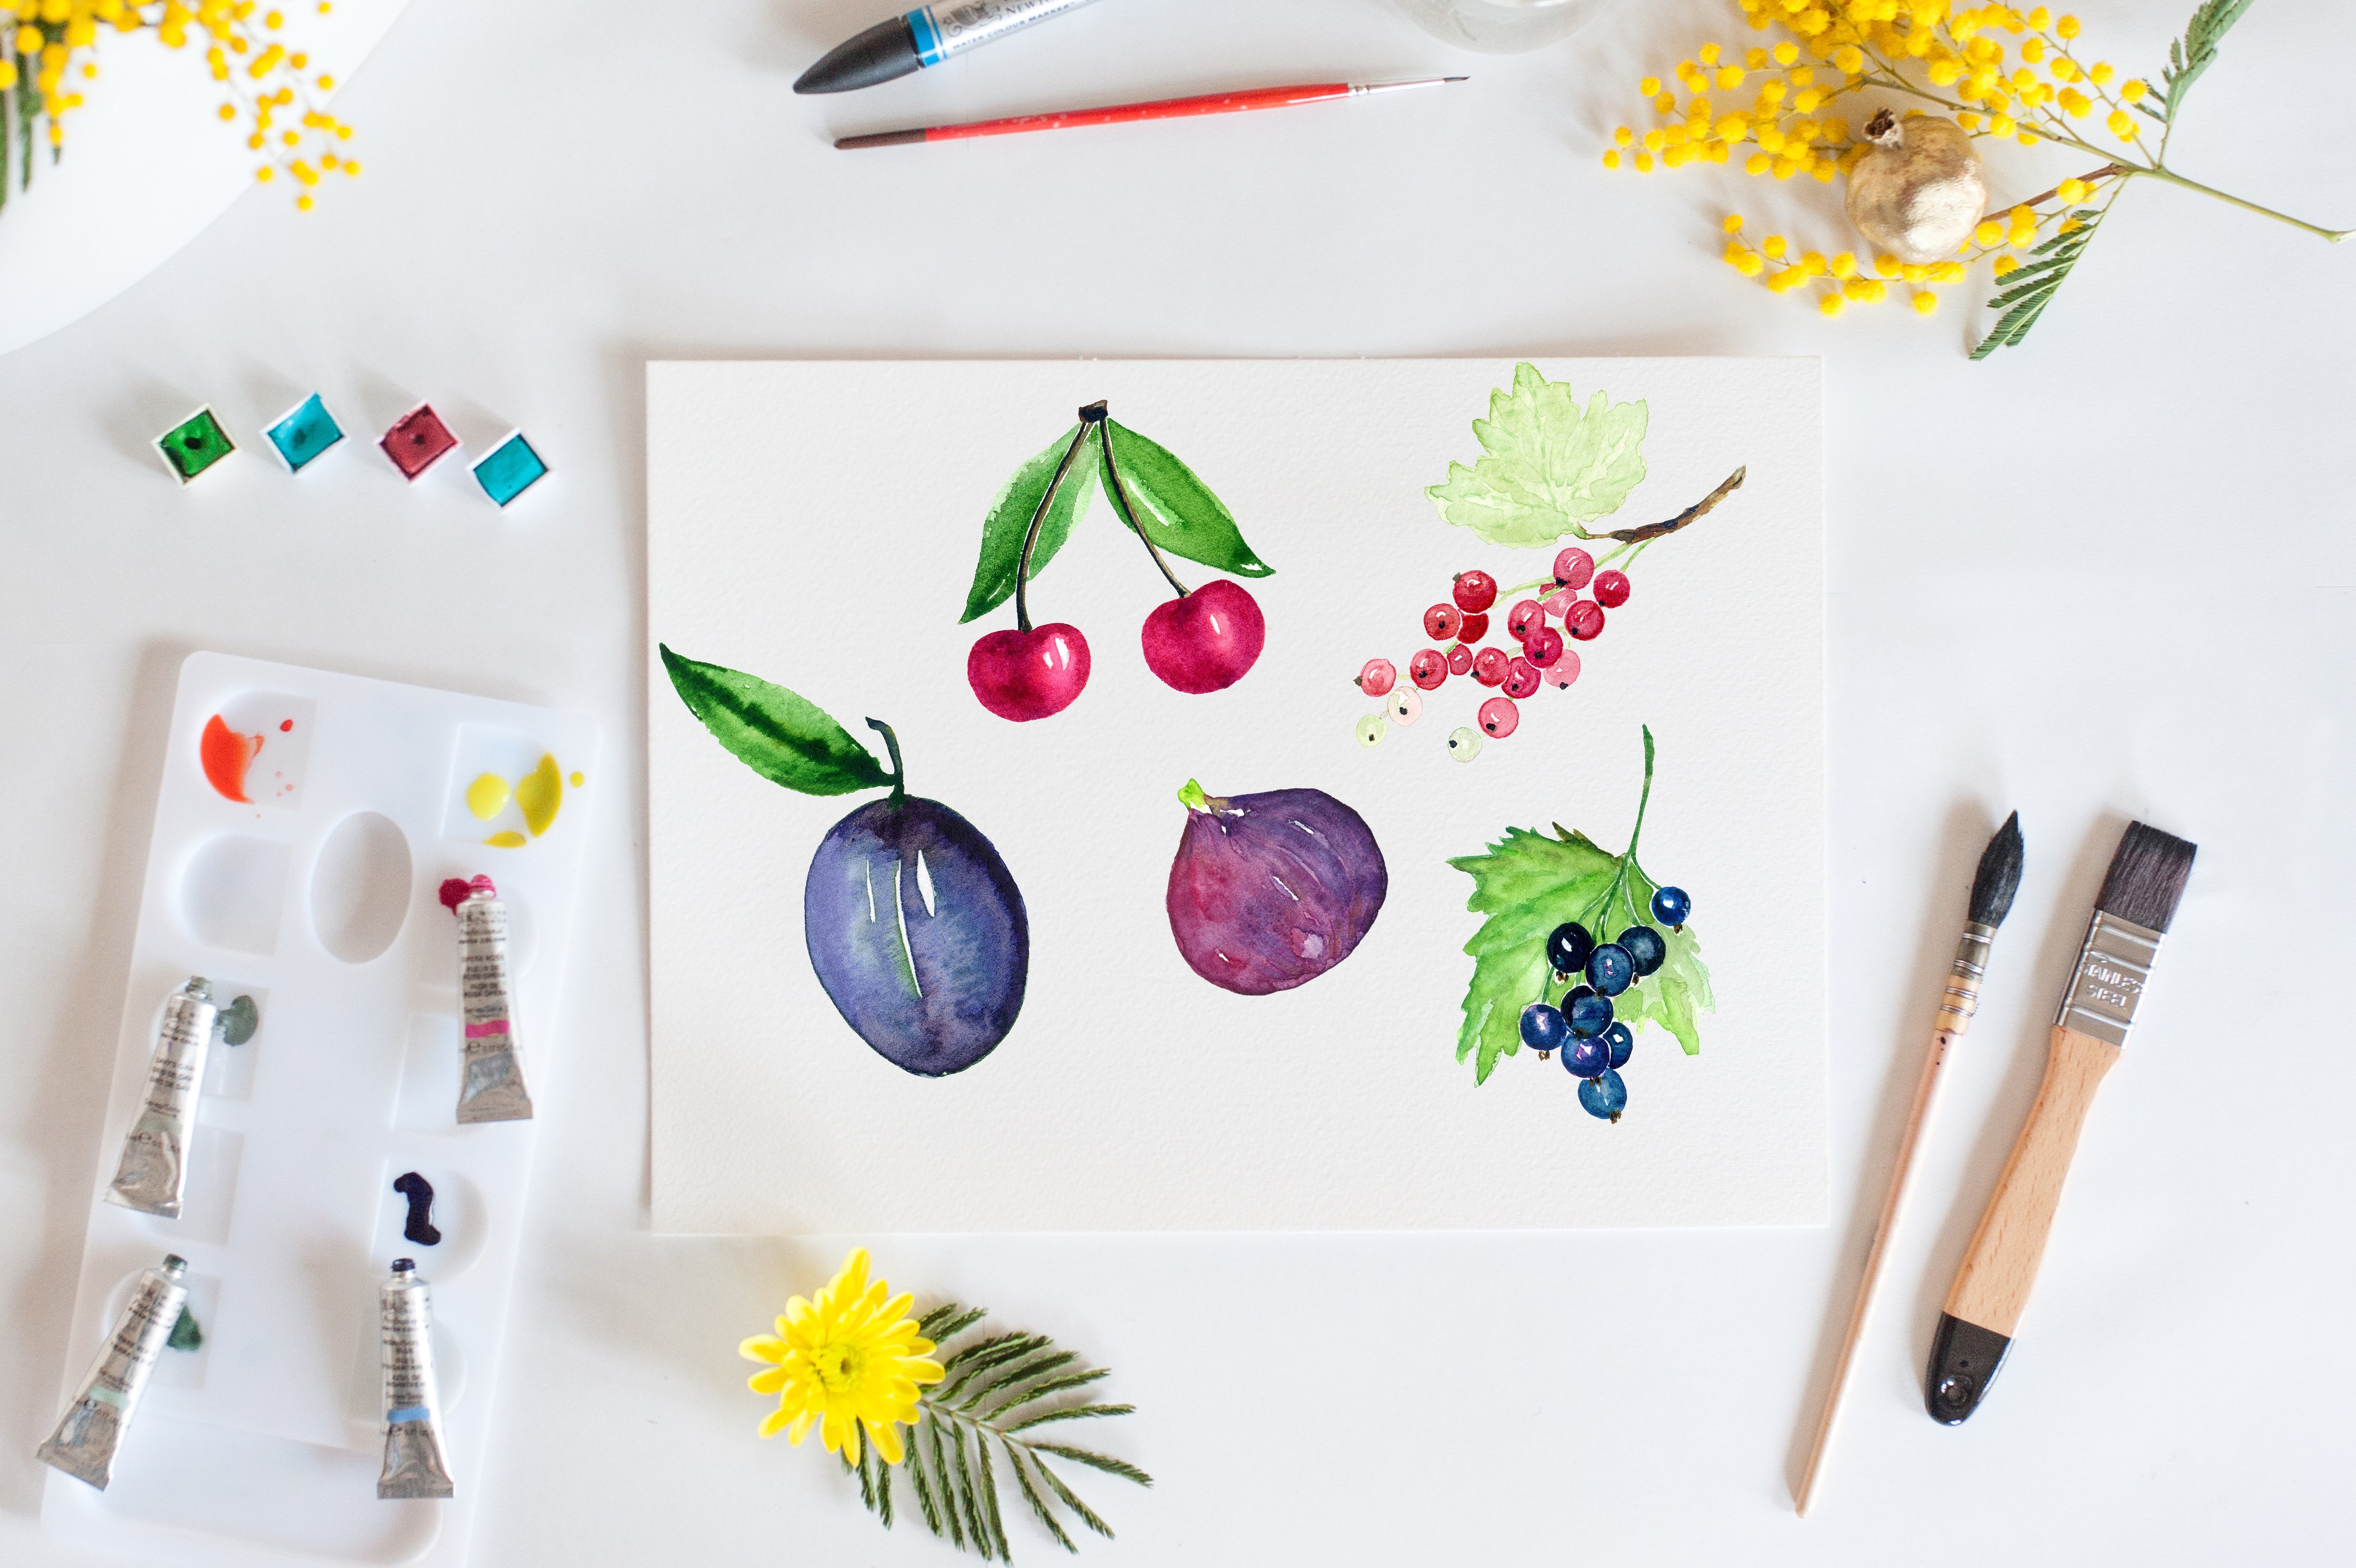 Fruits & berries watercolo